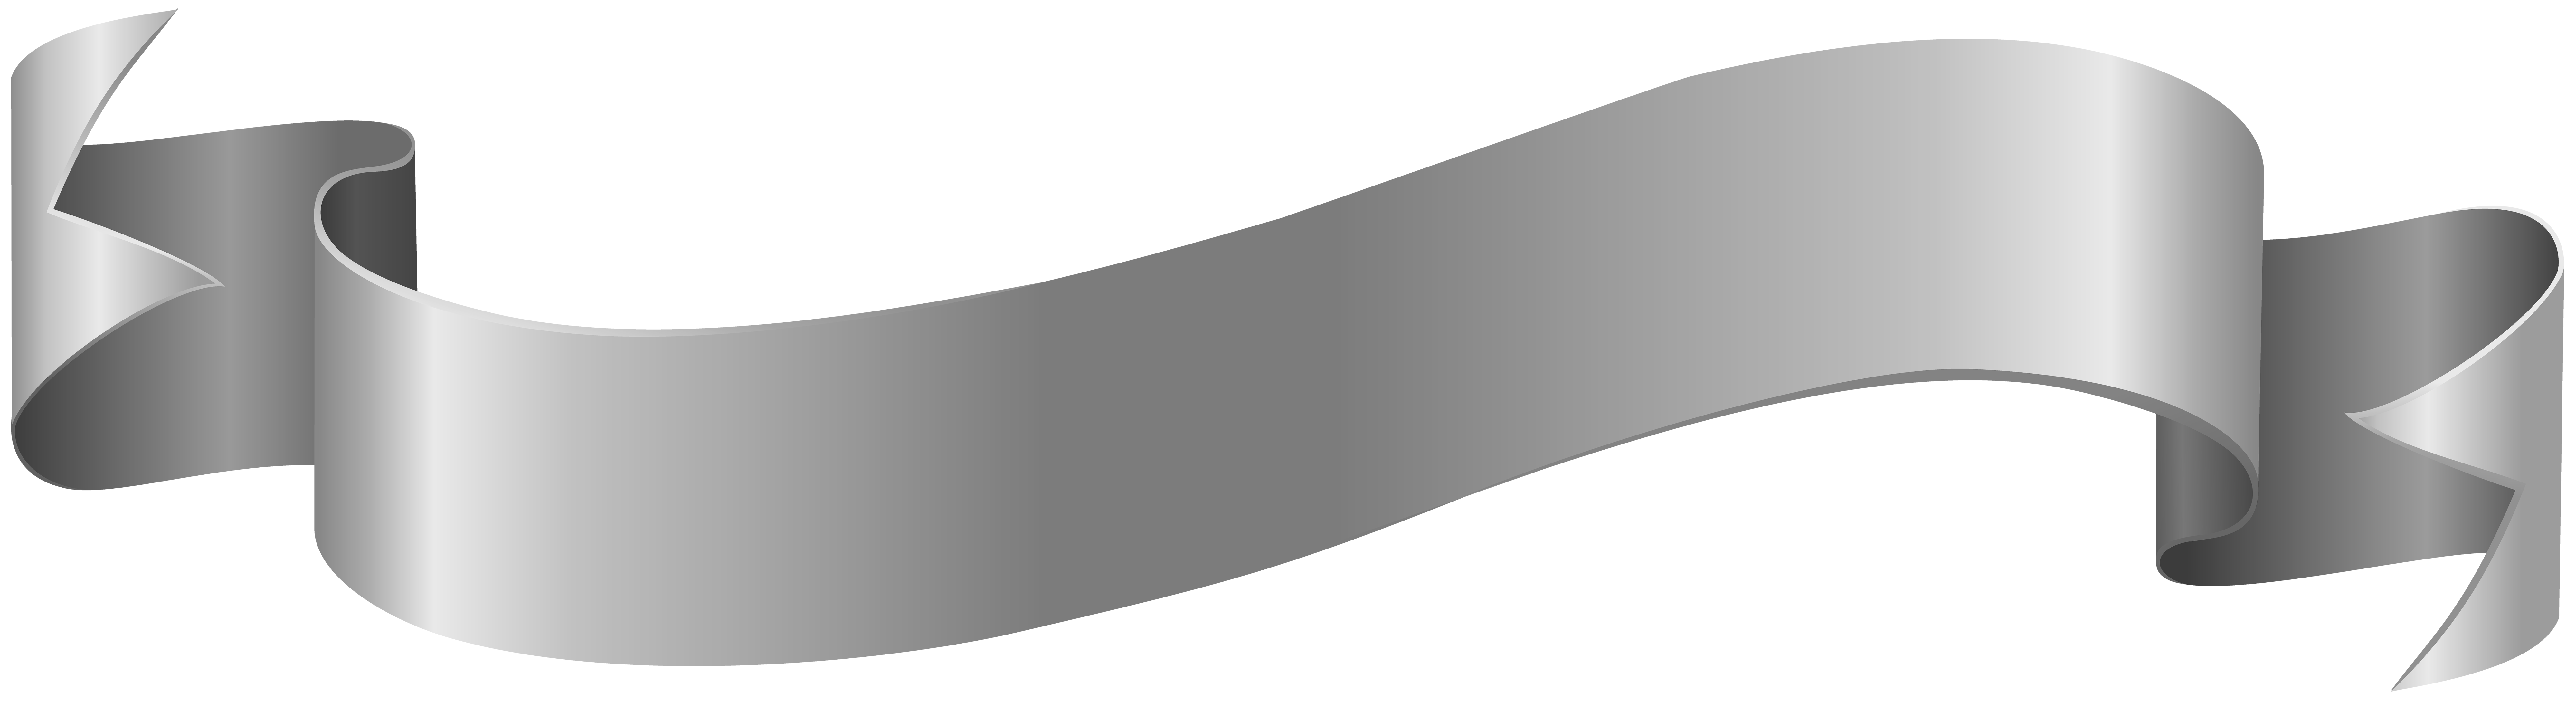 label clipart grey banner